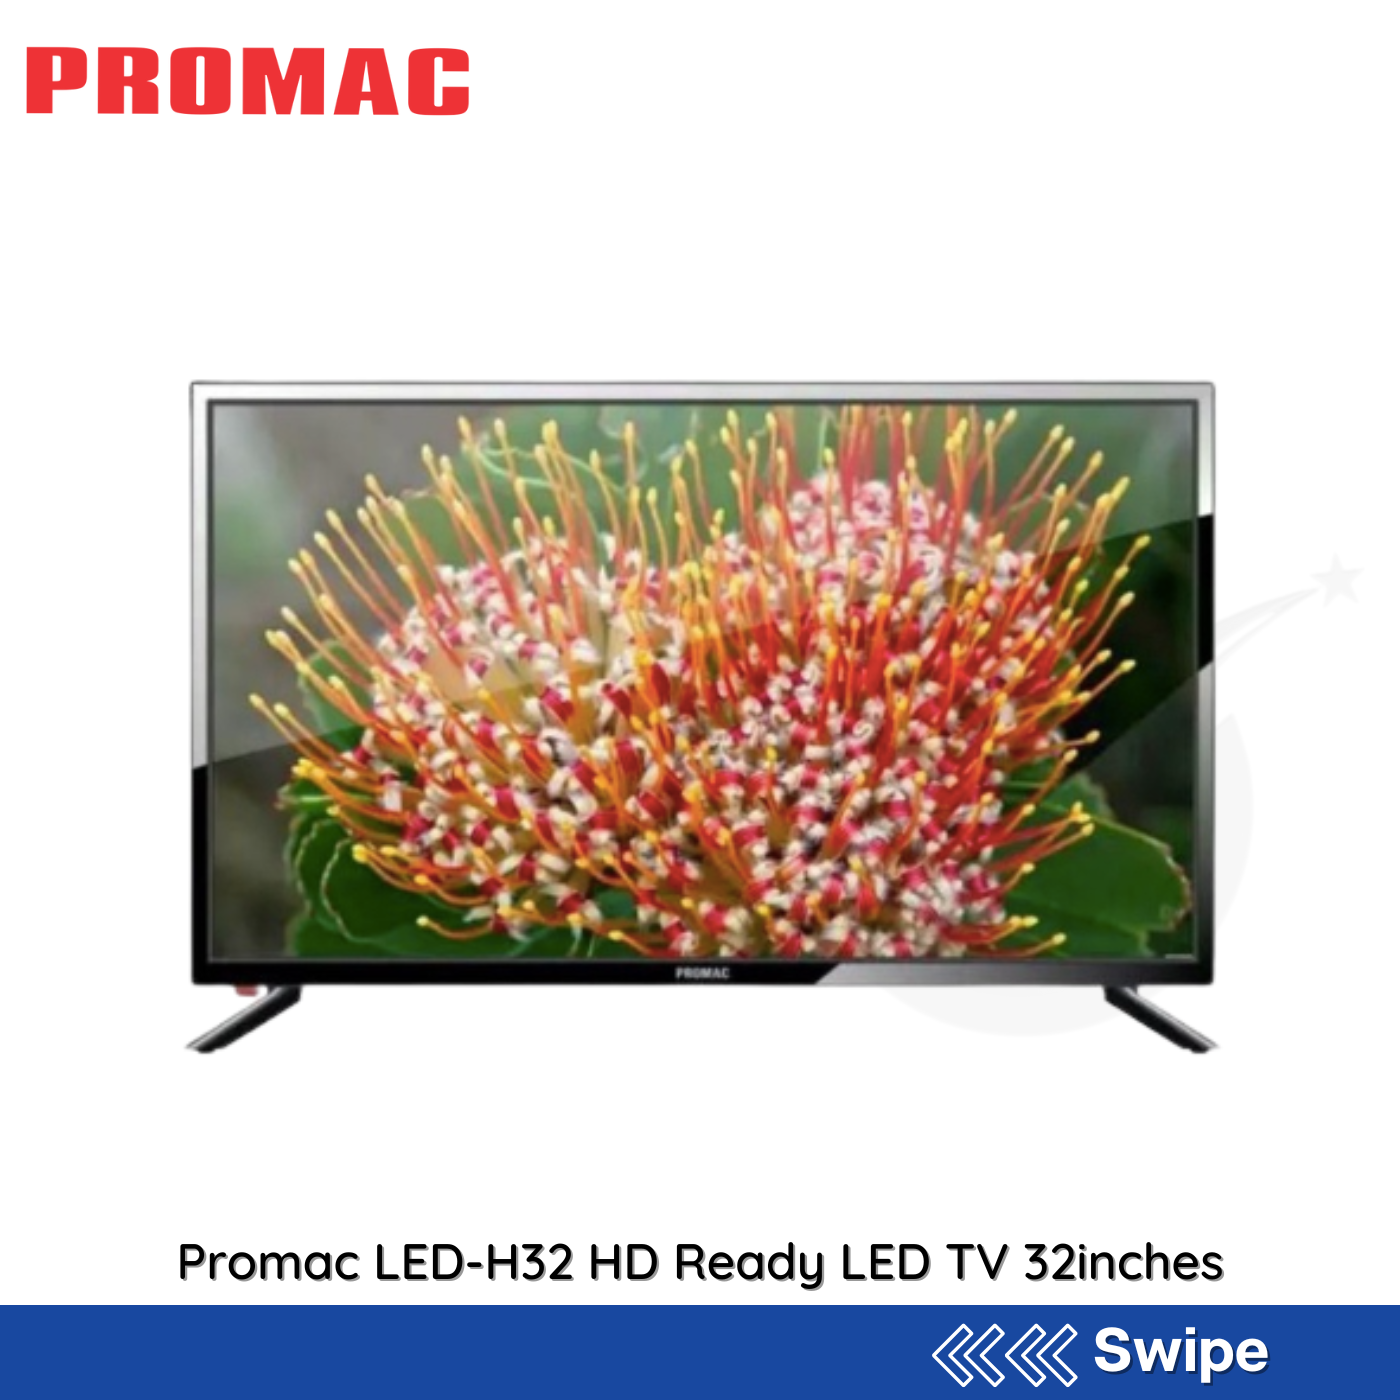 Promac LED-H32 HD Ready LED TV 32inches